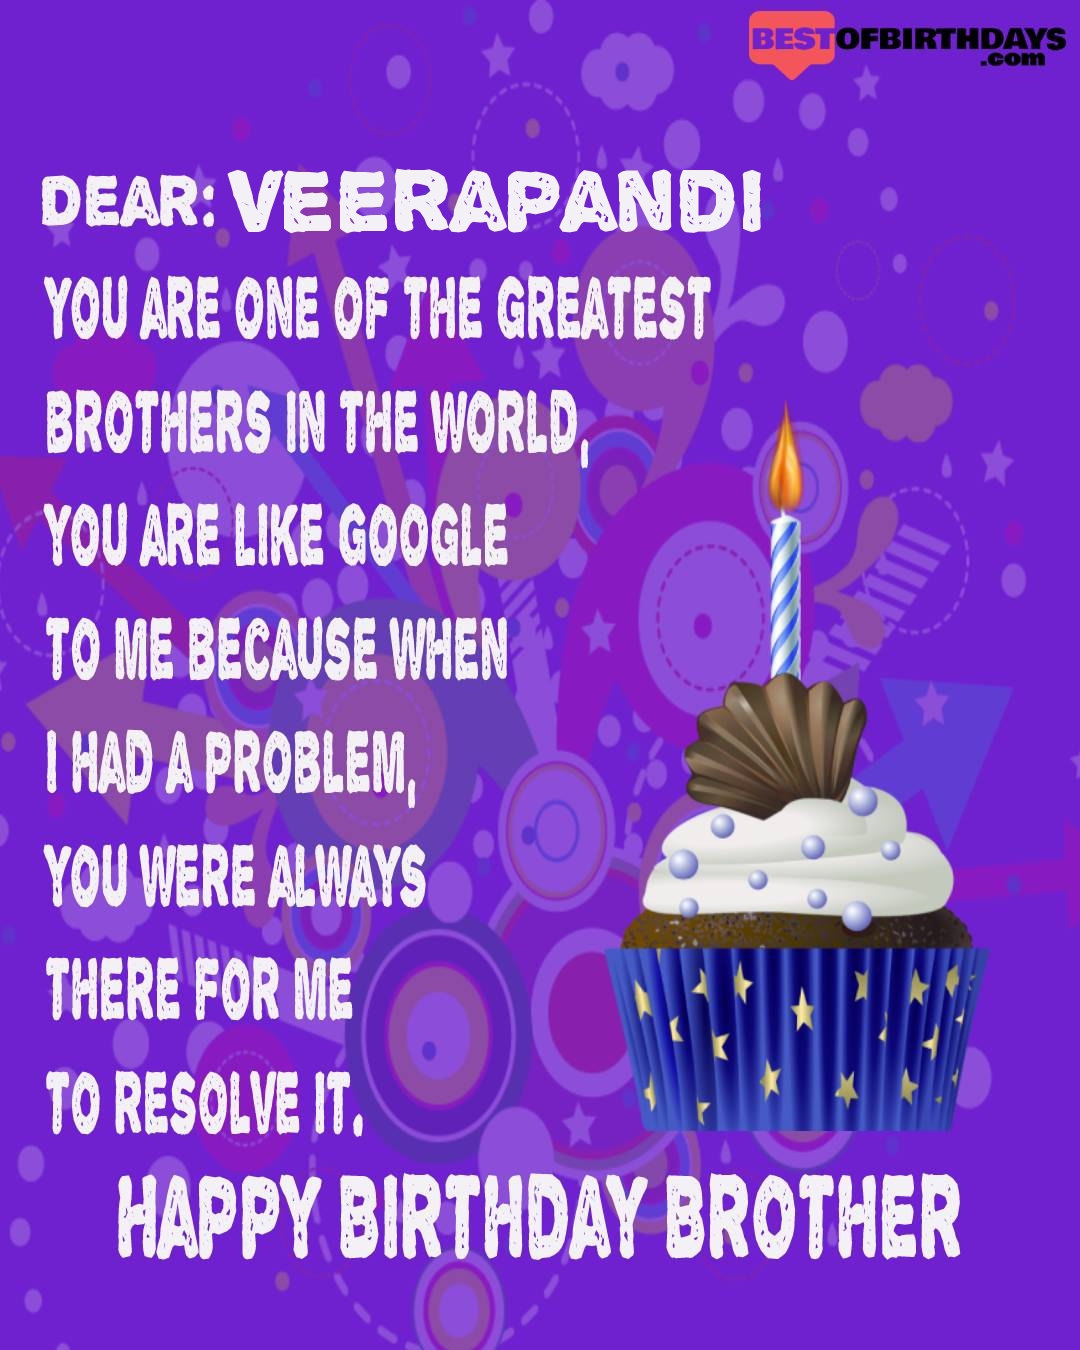 Happy birthday veerapandi bhai brother bro